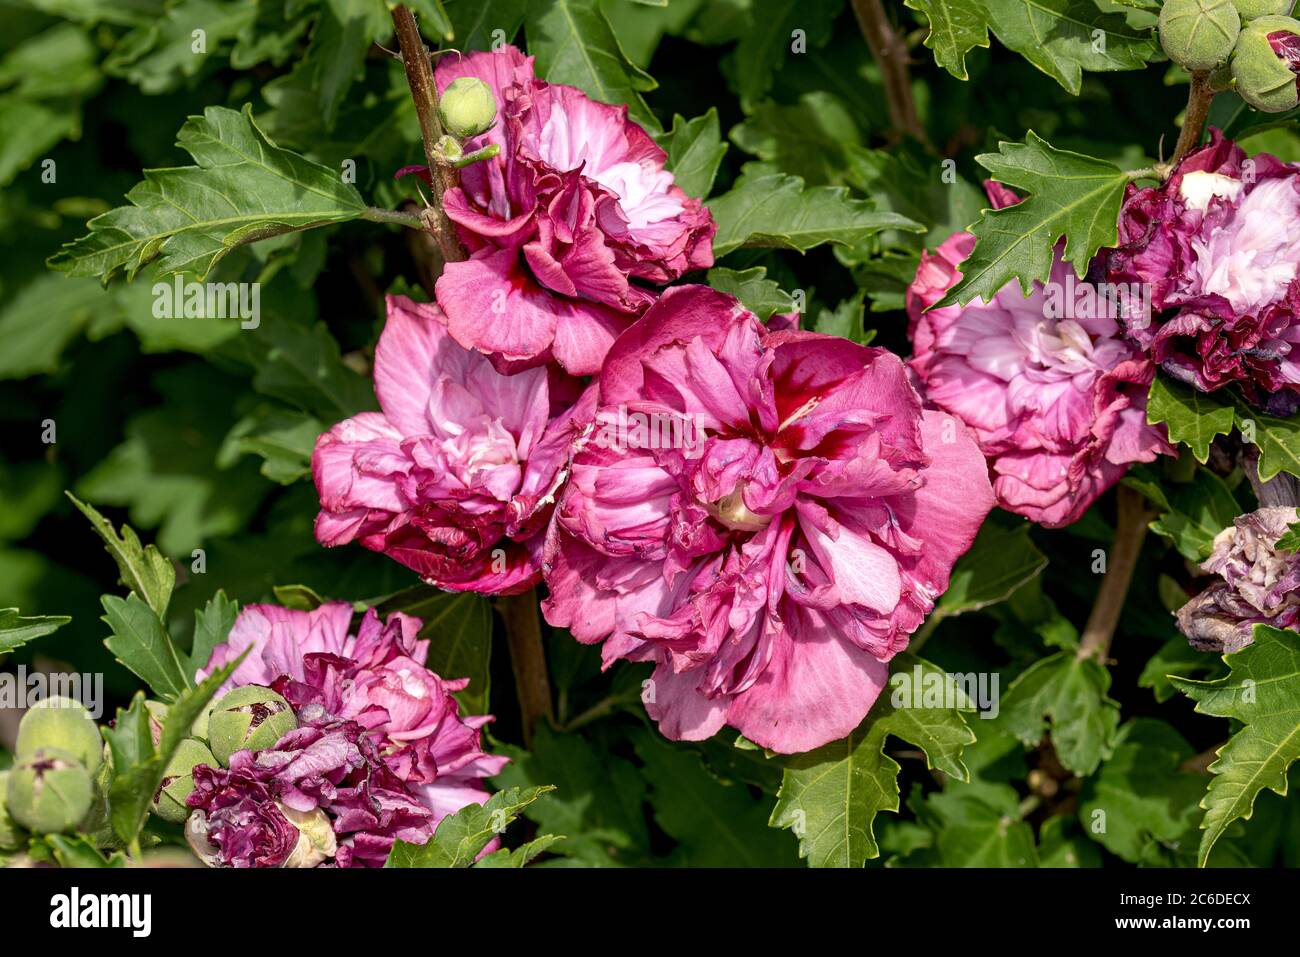 Garten-Eibisch, Hibiscus syriacus Duc de Brabant, Garden Hibiscus, Hibiscus syriacus Duc de Brabant Stock Photo